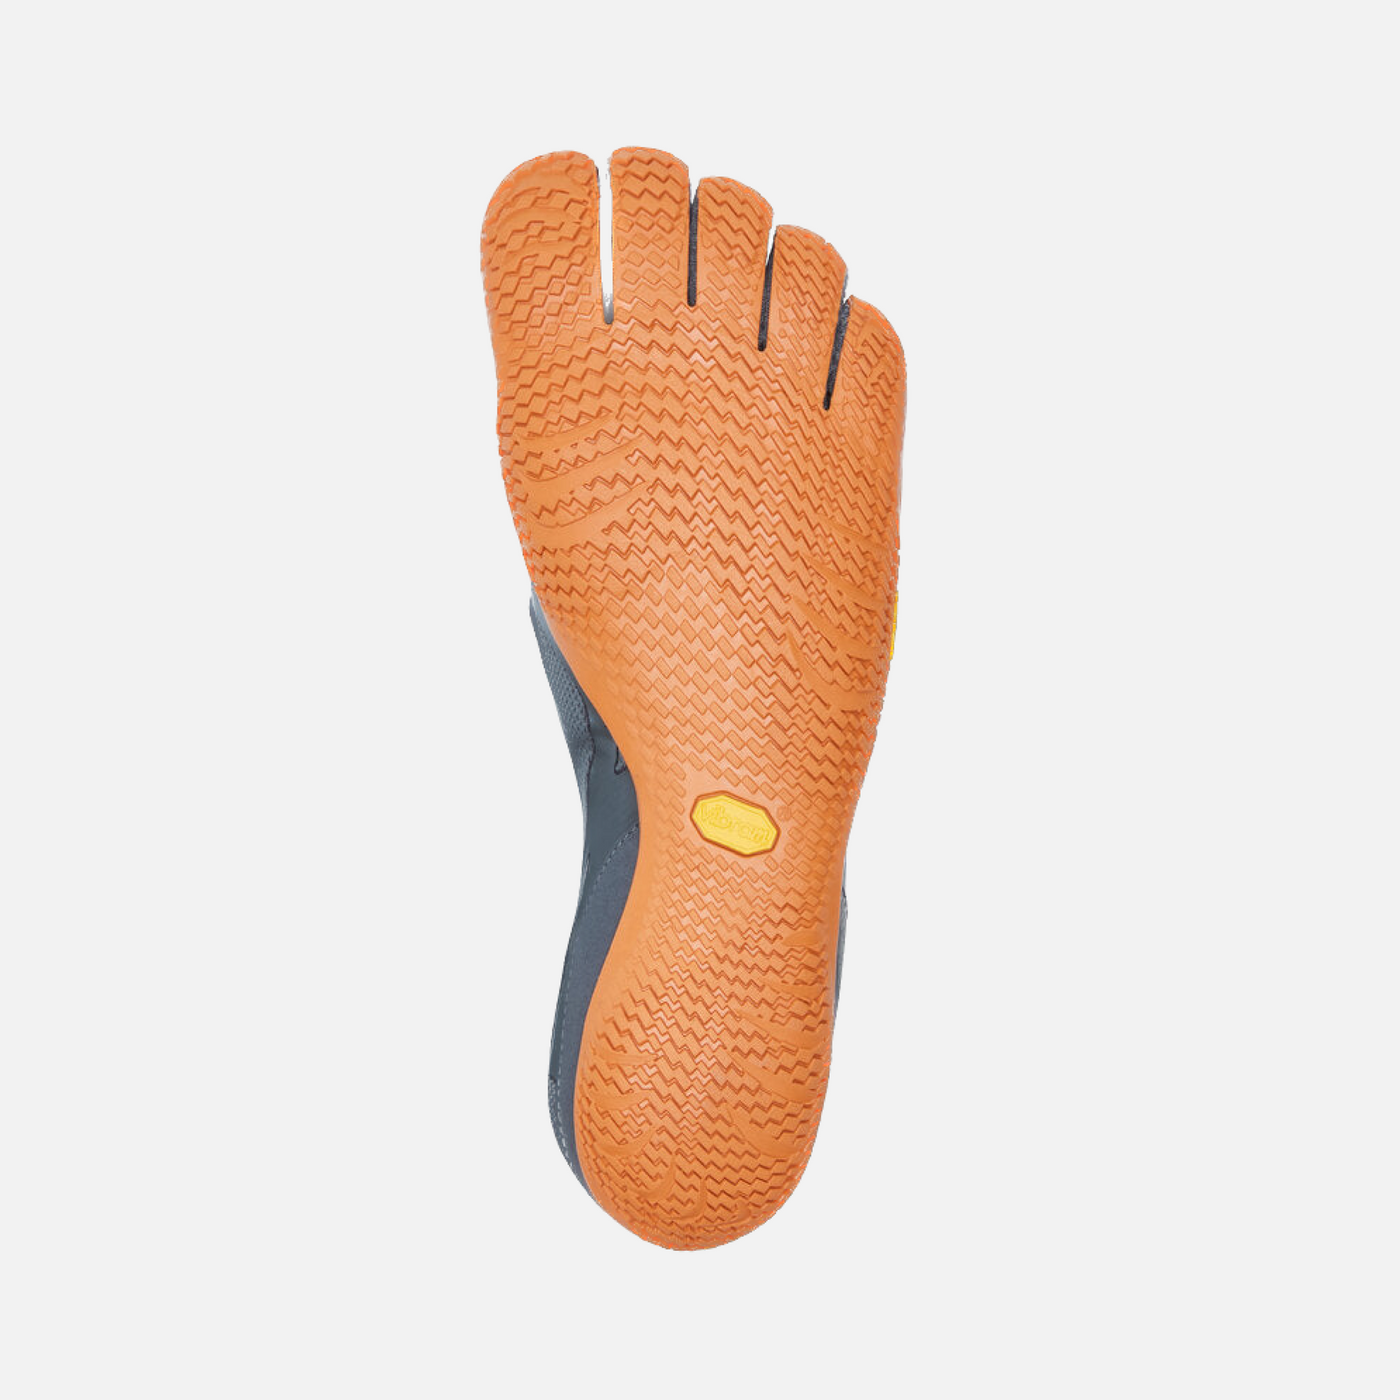 Vibram Kso Evo Mens Barefoot Training Footwear -Grey/Orange